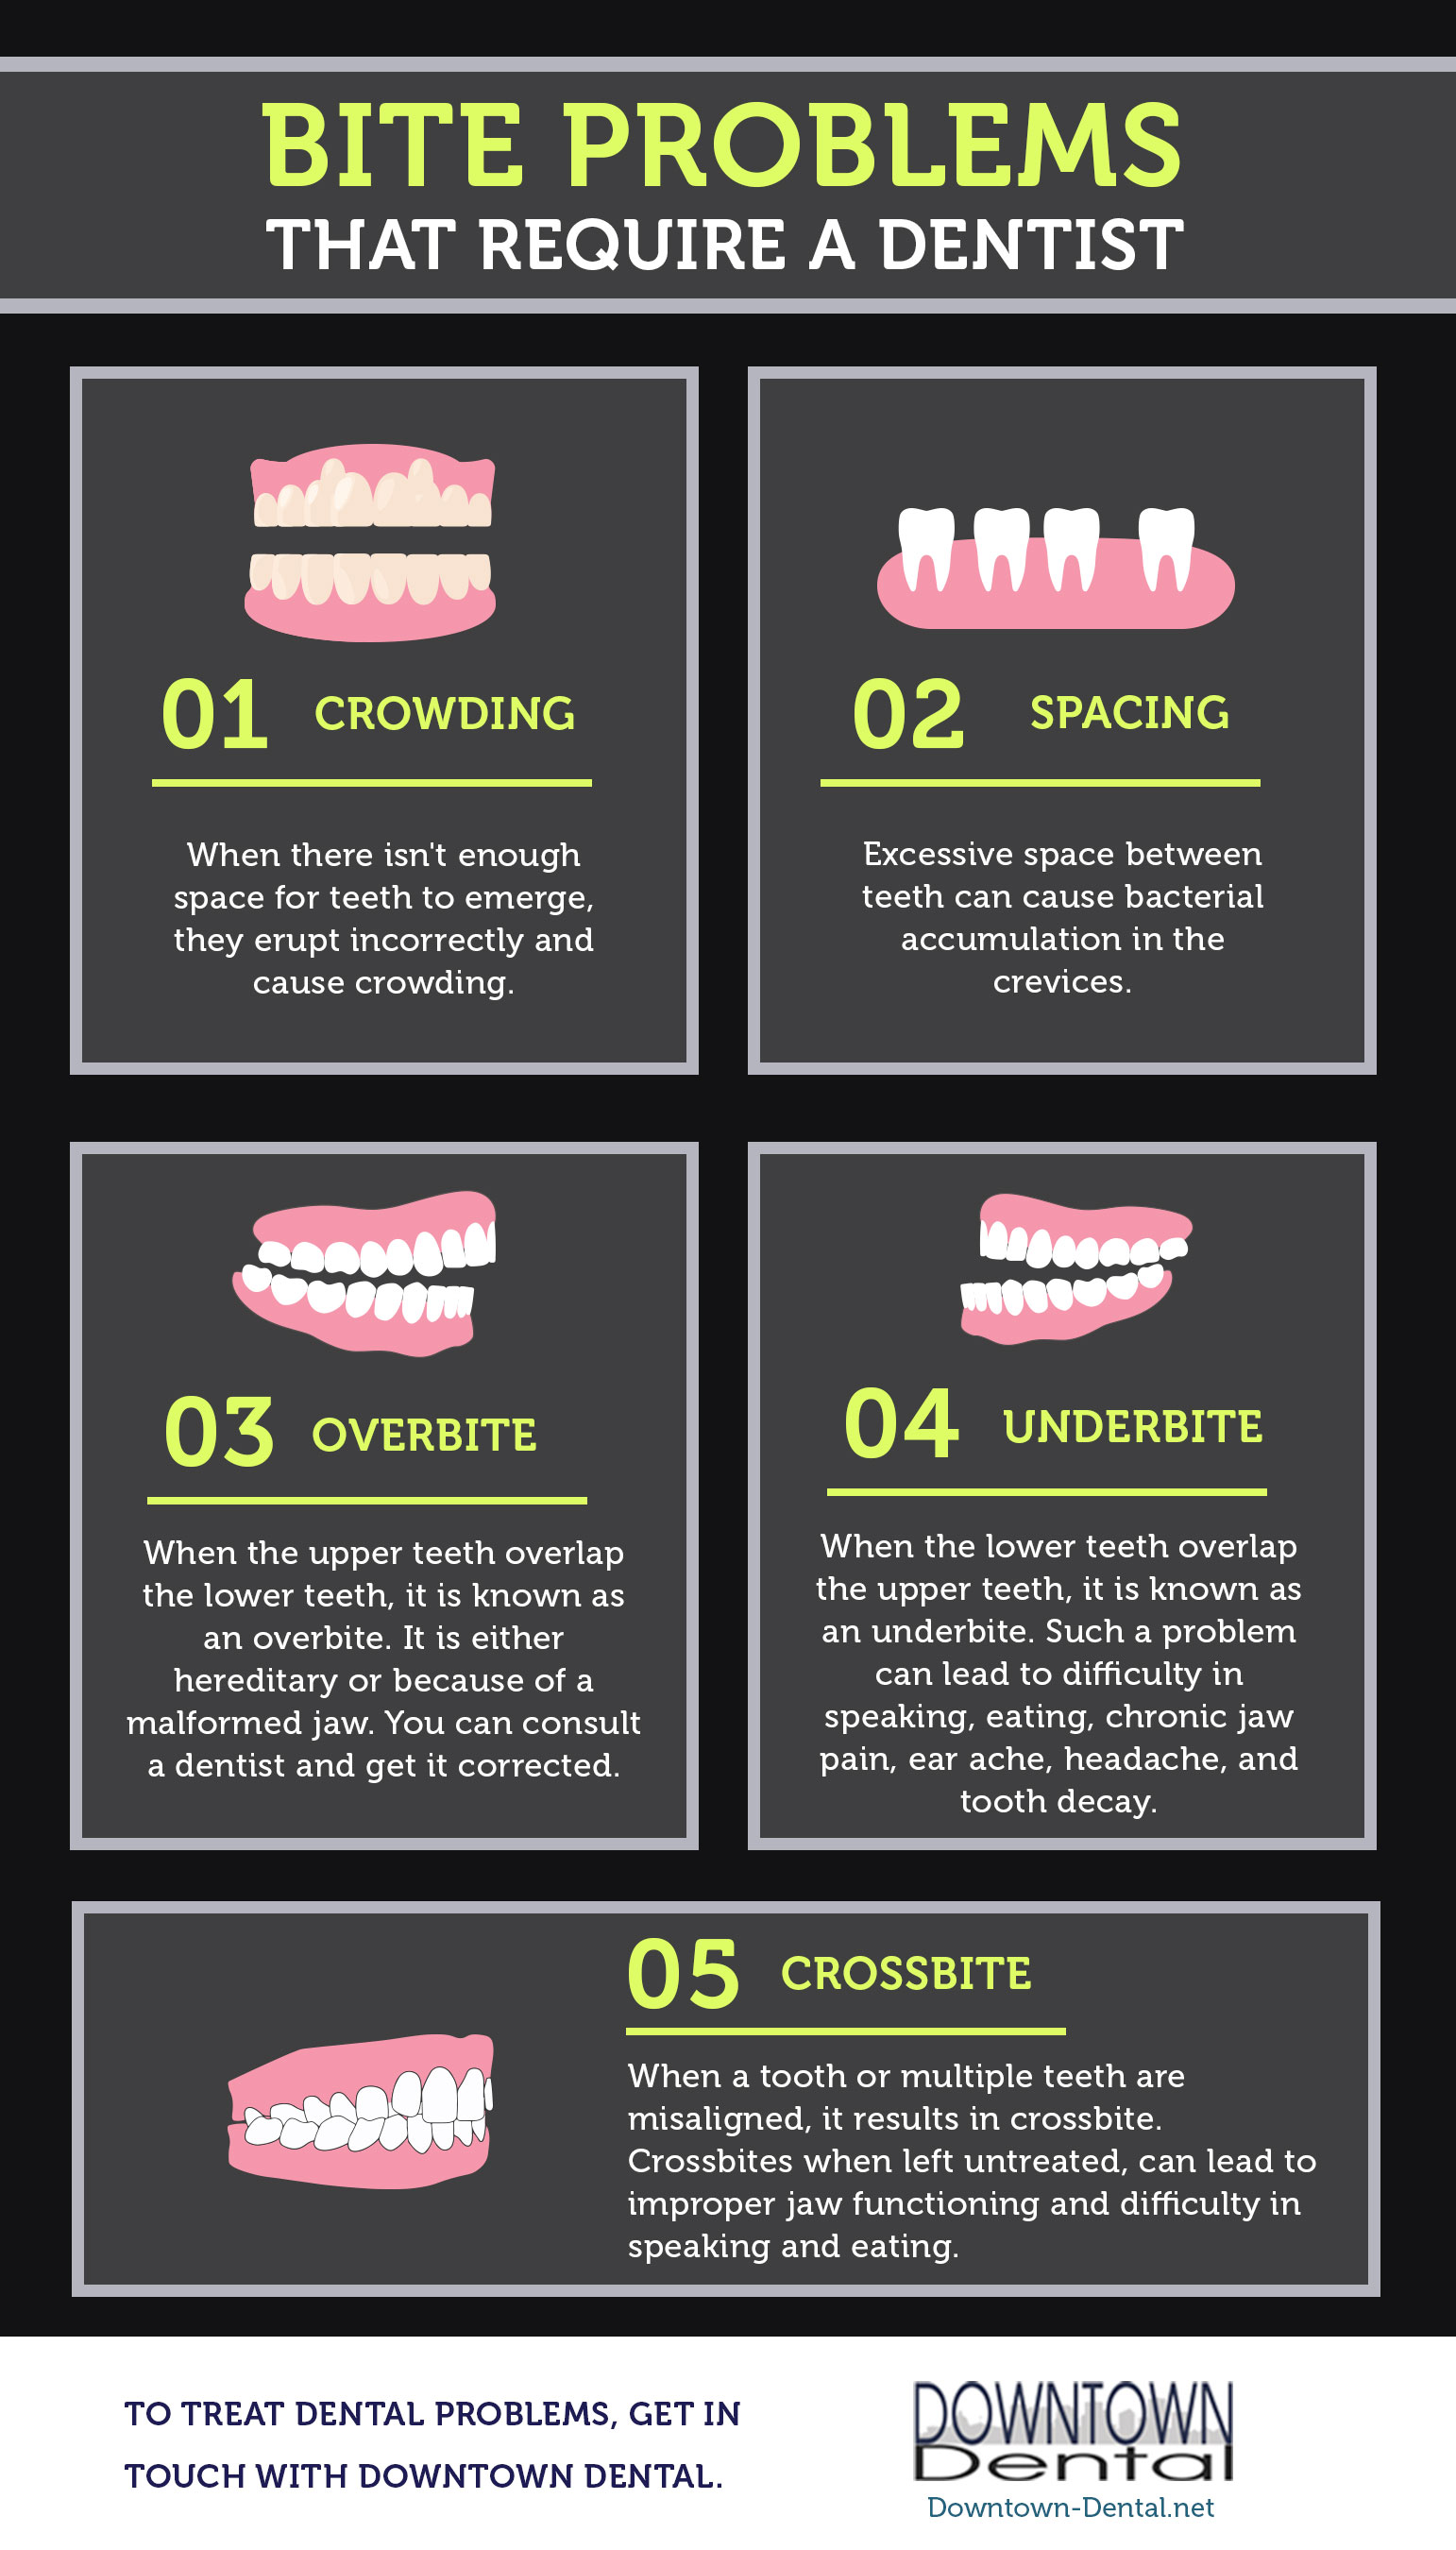 Bite Problems That Require a Dentist